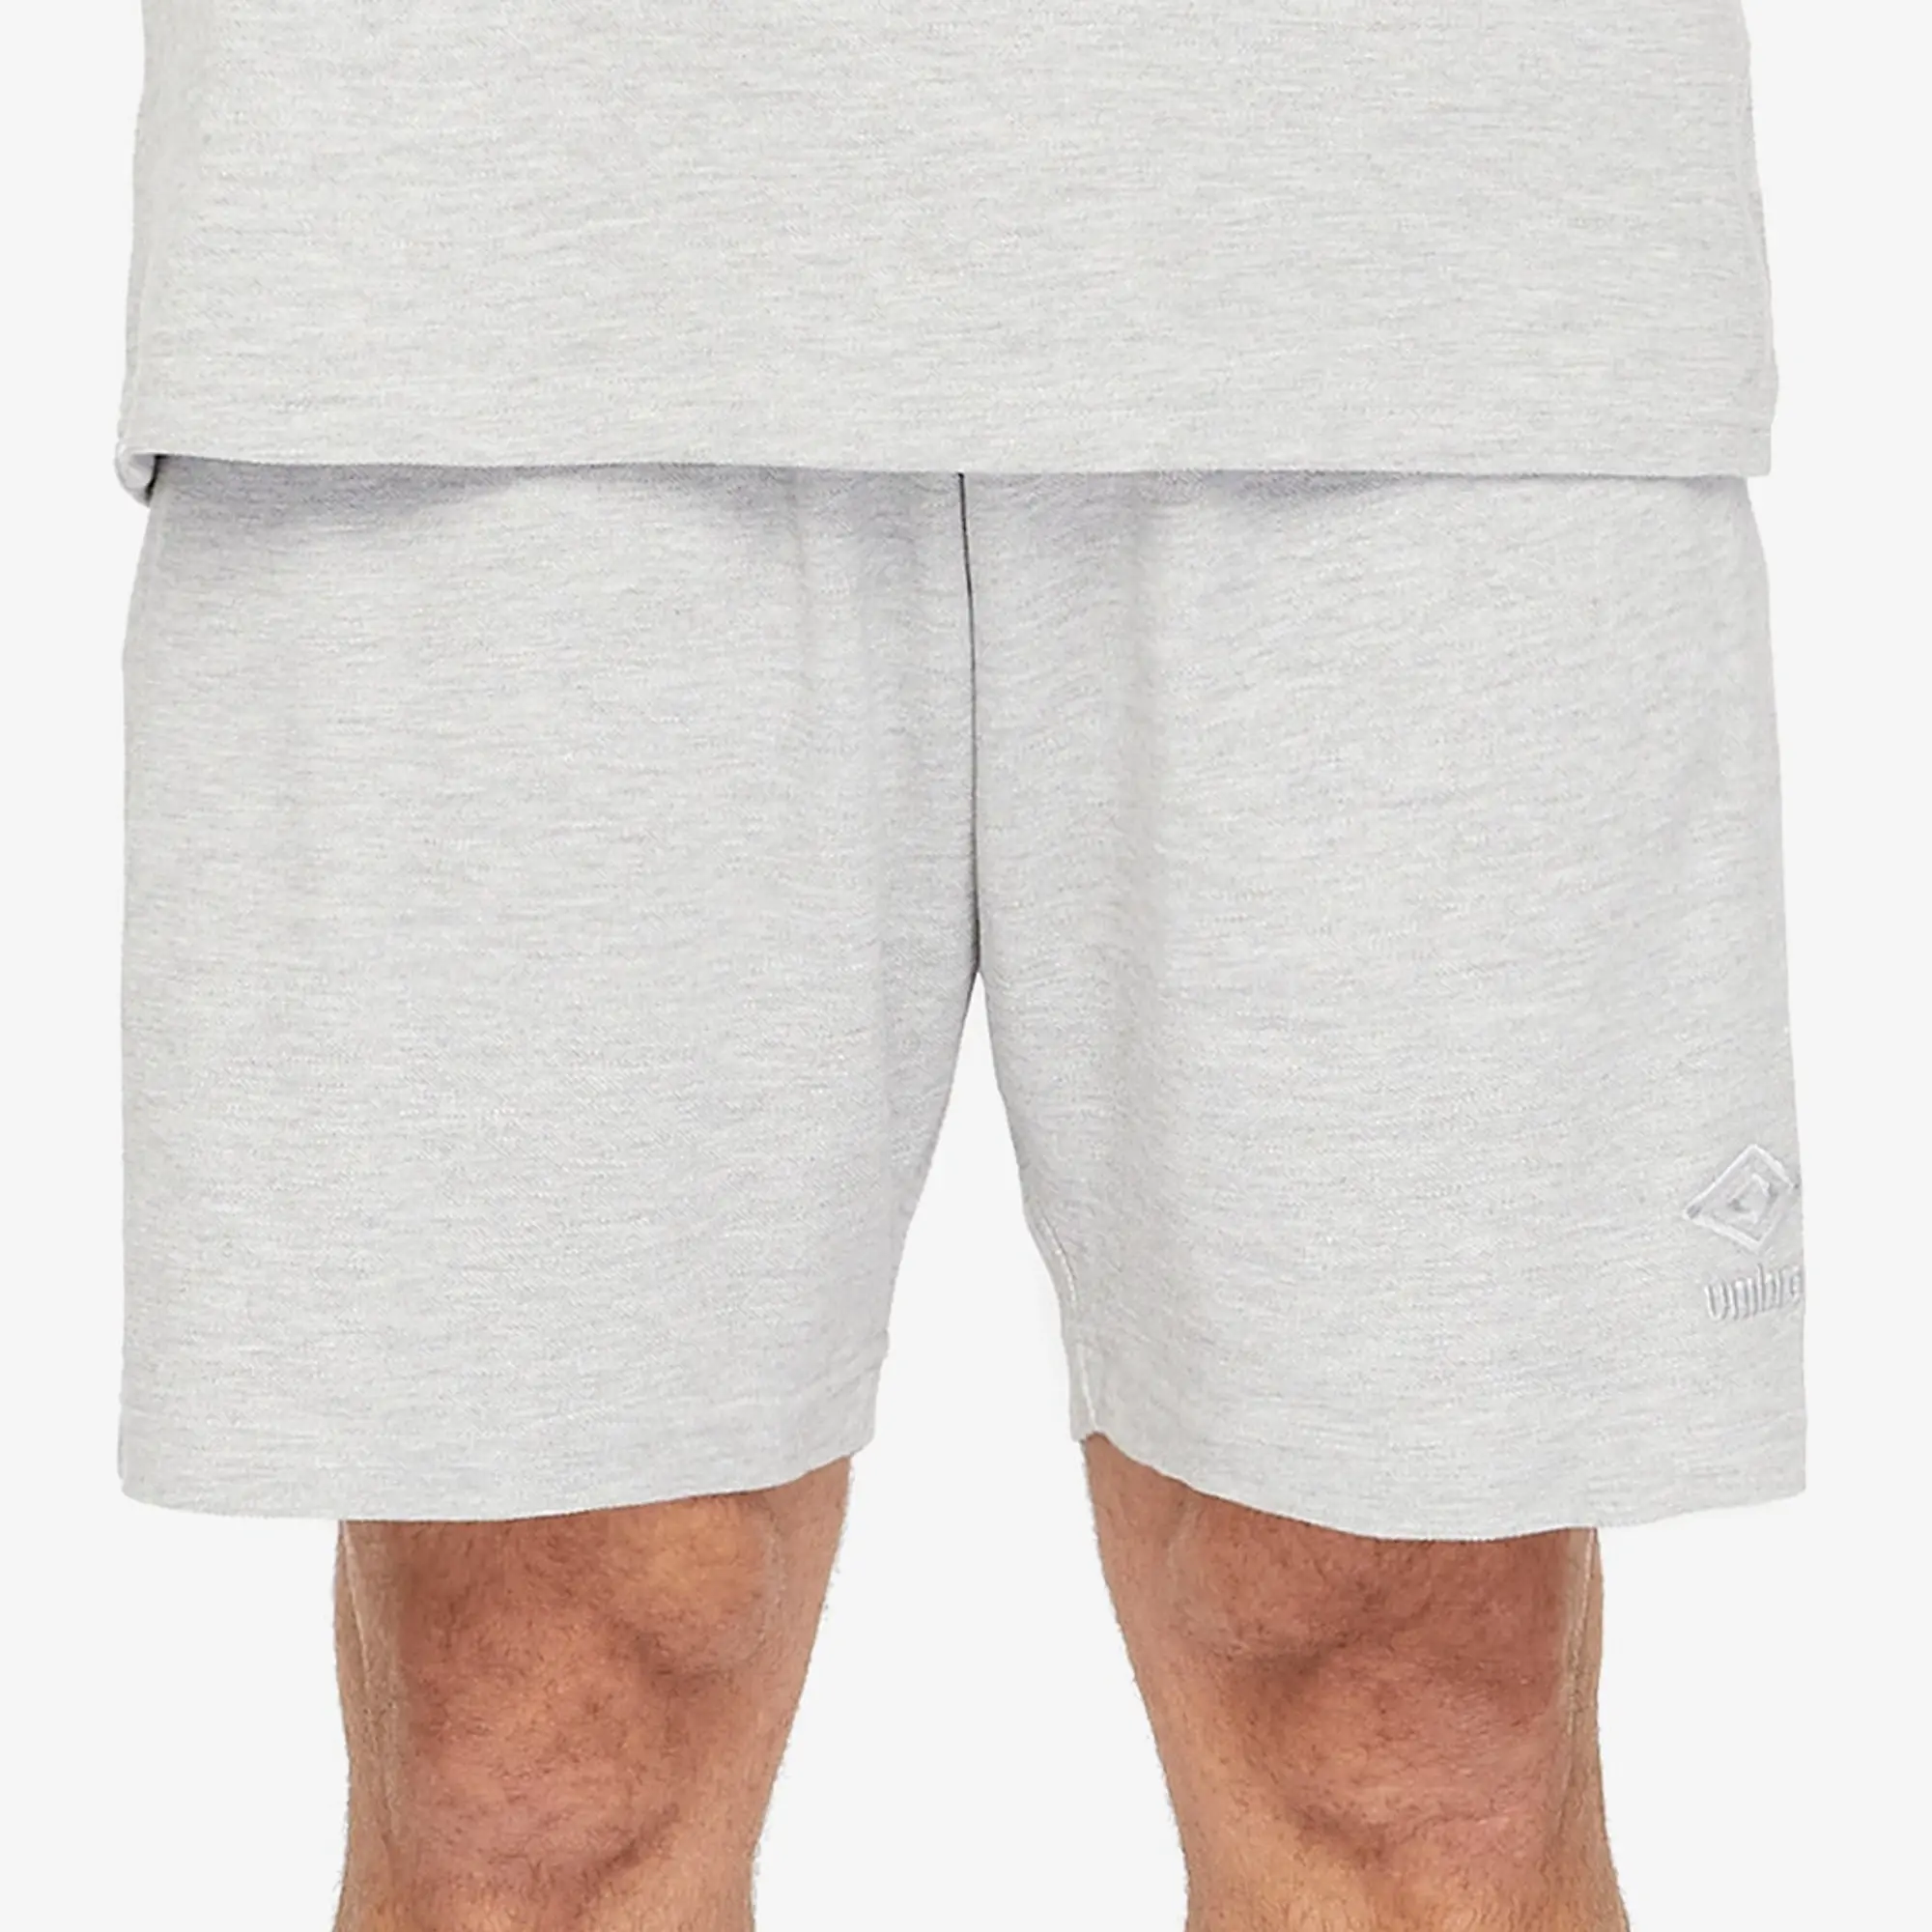 Umbro Sport Style Pique Shorts Grey Marl